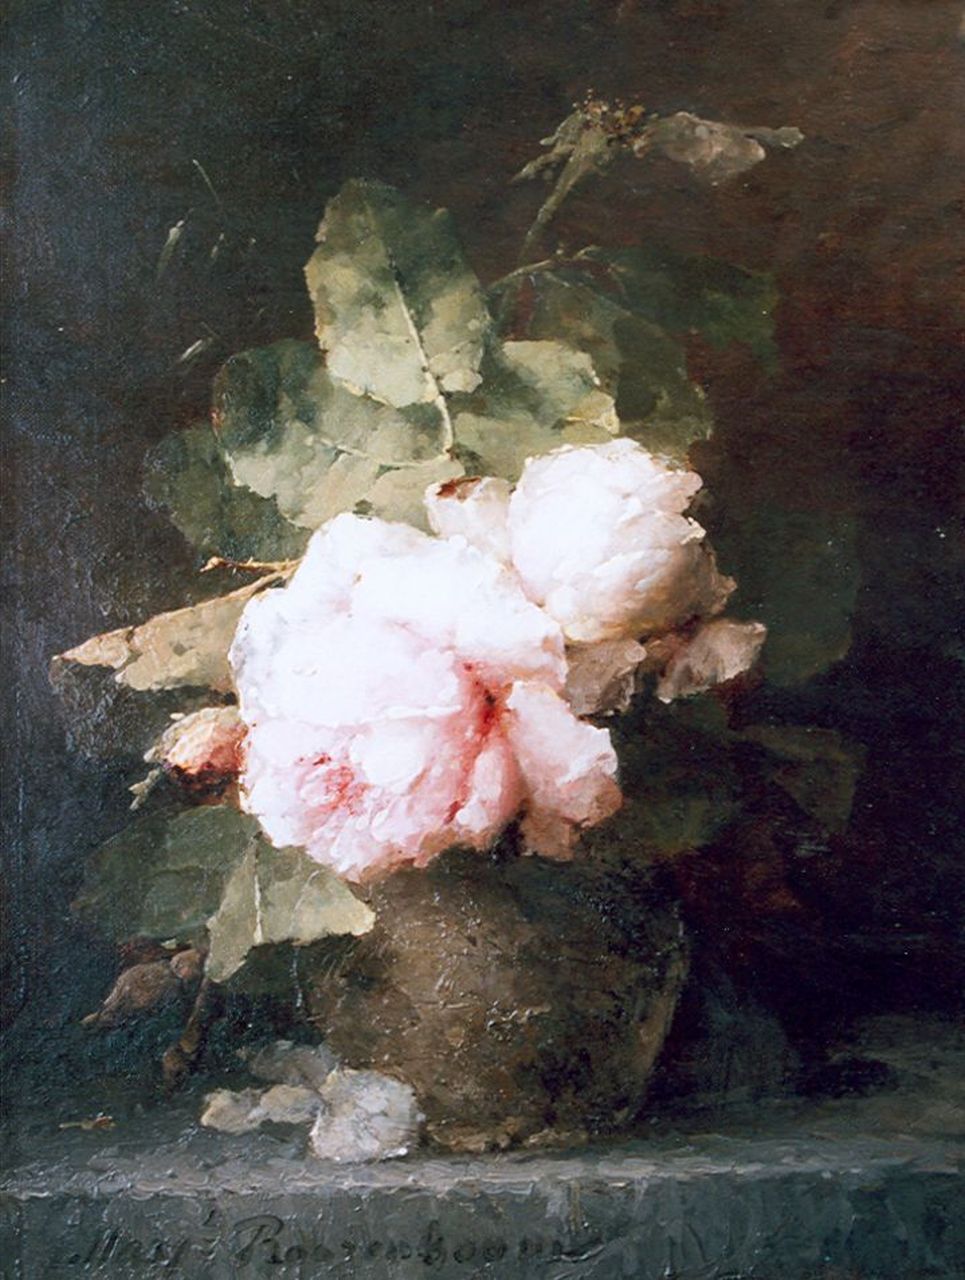 Roosenboom M.C.J.W.H.  | 'Margaretha' Cornelia Johanna Wilhelmina Henriëtta Roosenboom, Pink roses, Öl auf Leinwand 39,7 x 30,0 cm, signed l.l.